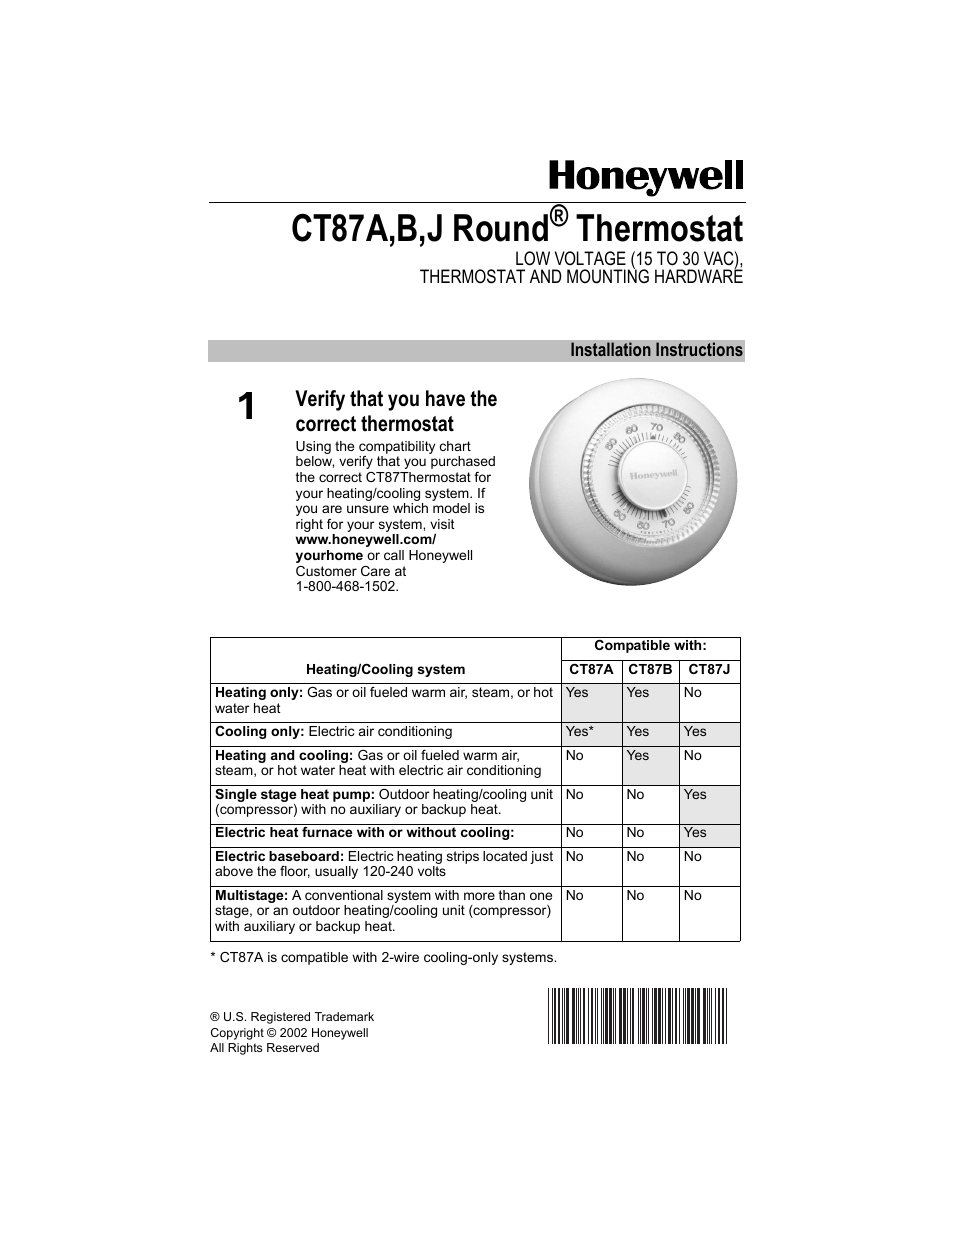 Honeywell Compatibility Chart